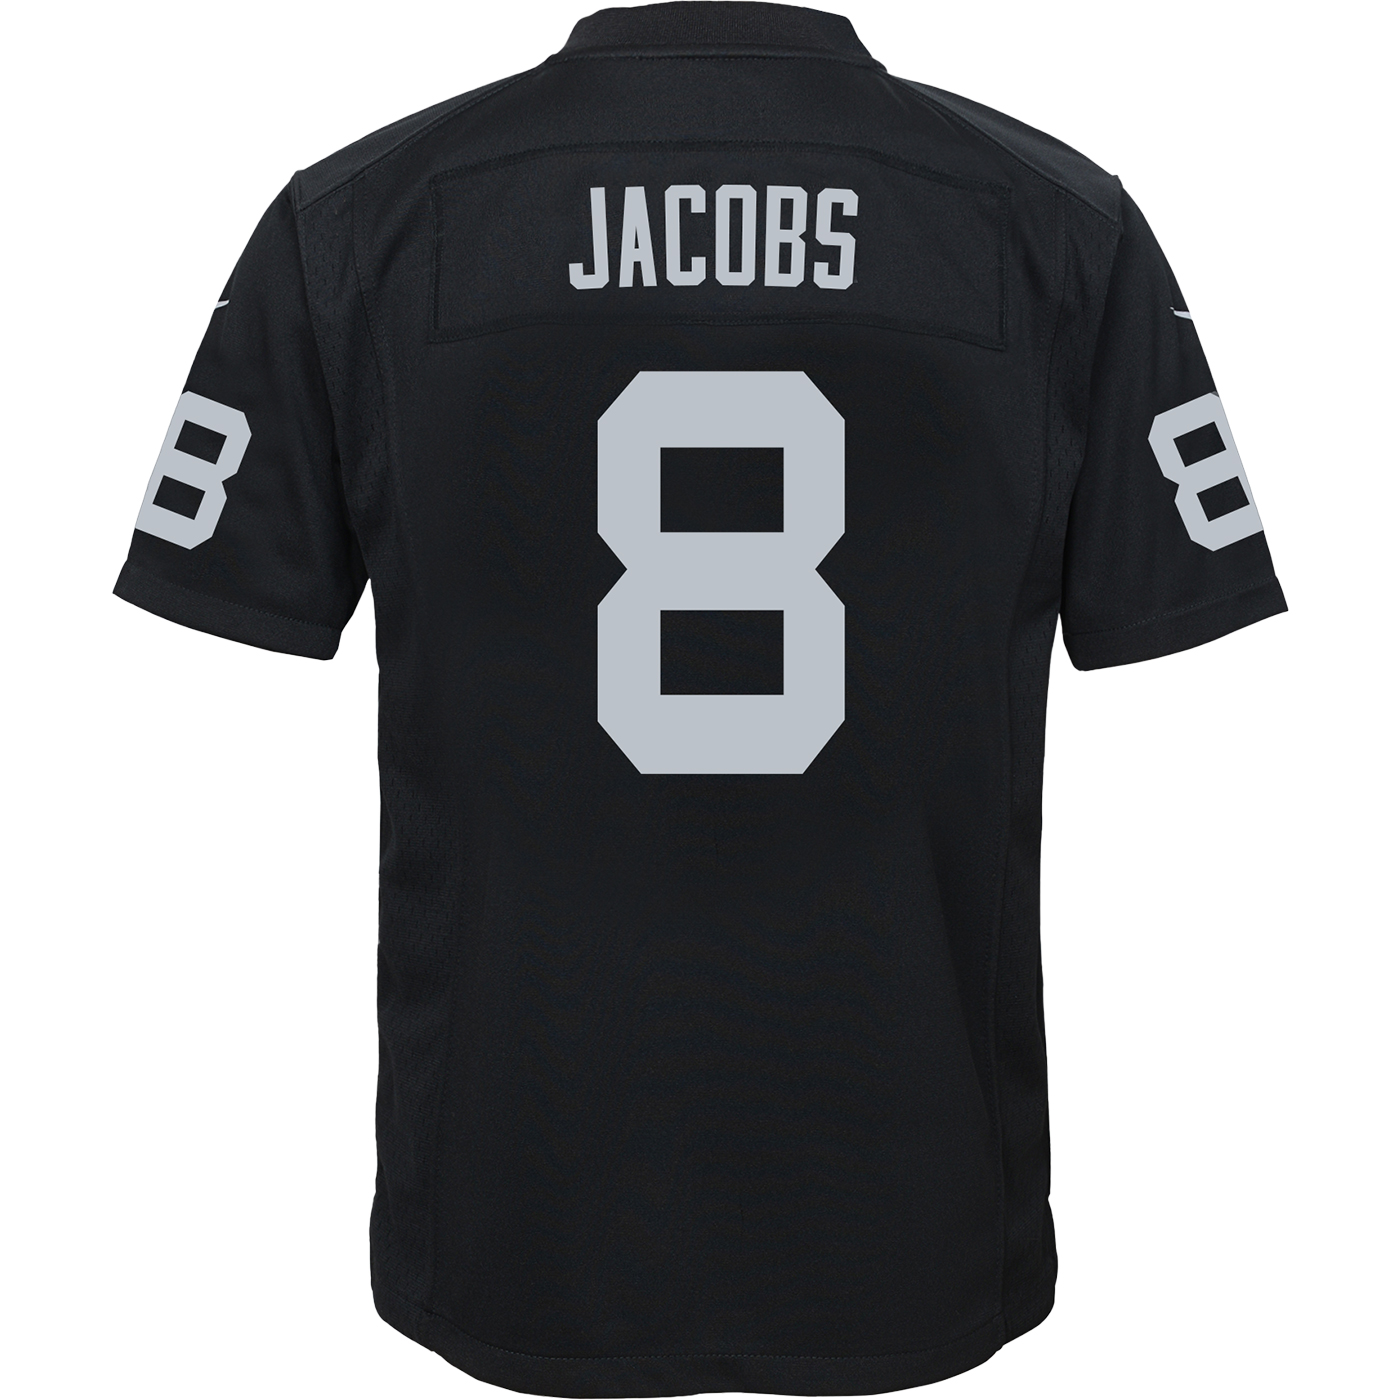 Josh Jacobs Jerseys, Josh Jacobs Shirt, Josh Jacobs Gear